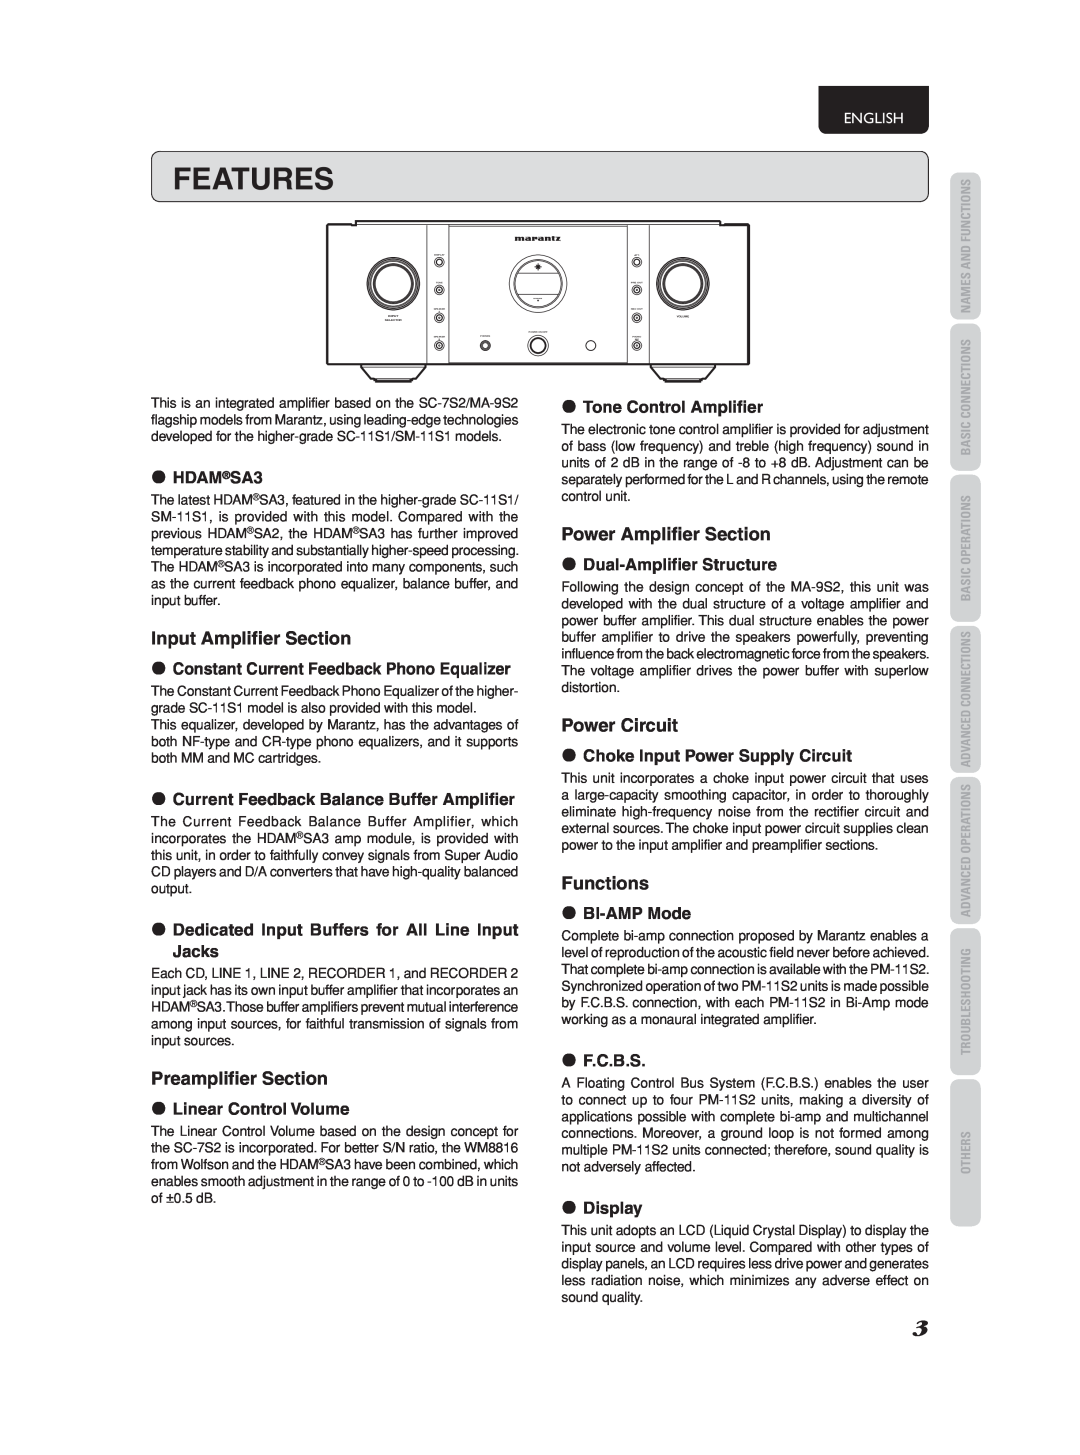 Marantz PM-11S2 Features, Input Amplifier Section, Power Amplifier Section, Power Circuit, Functions, Preamplifier Section 